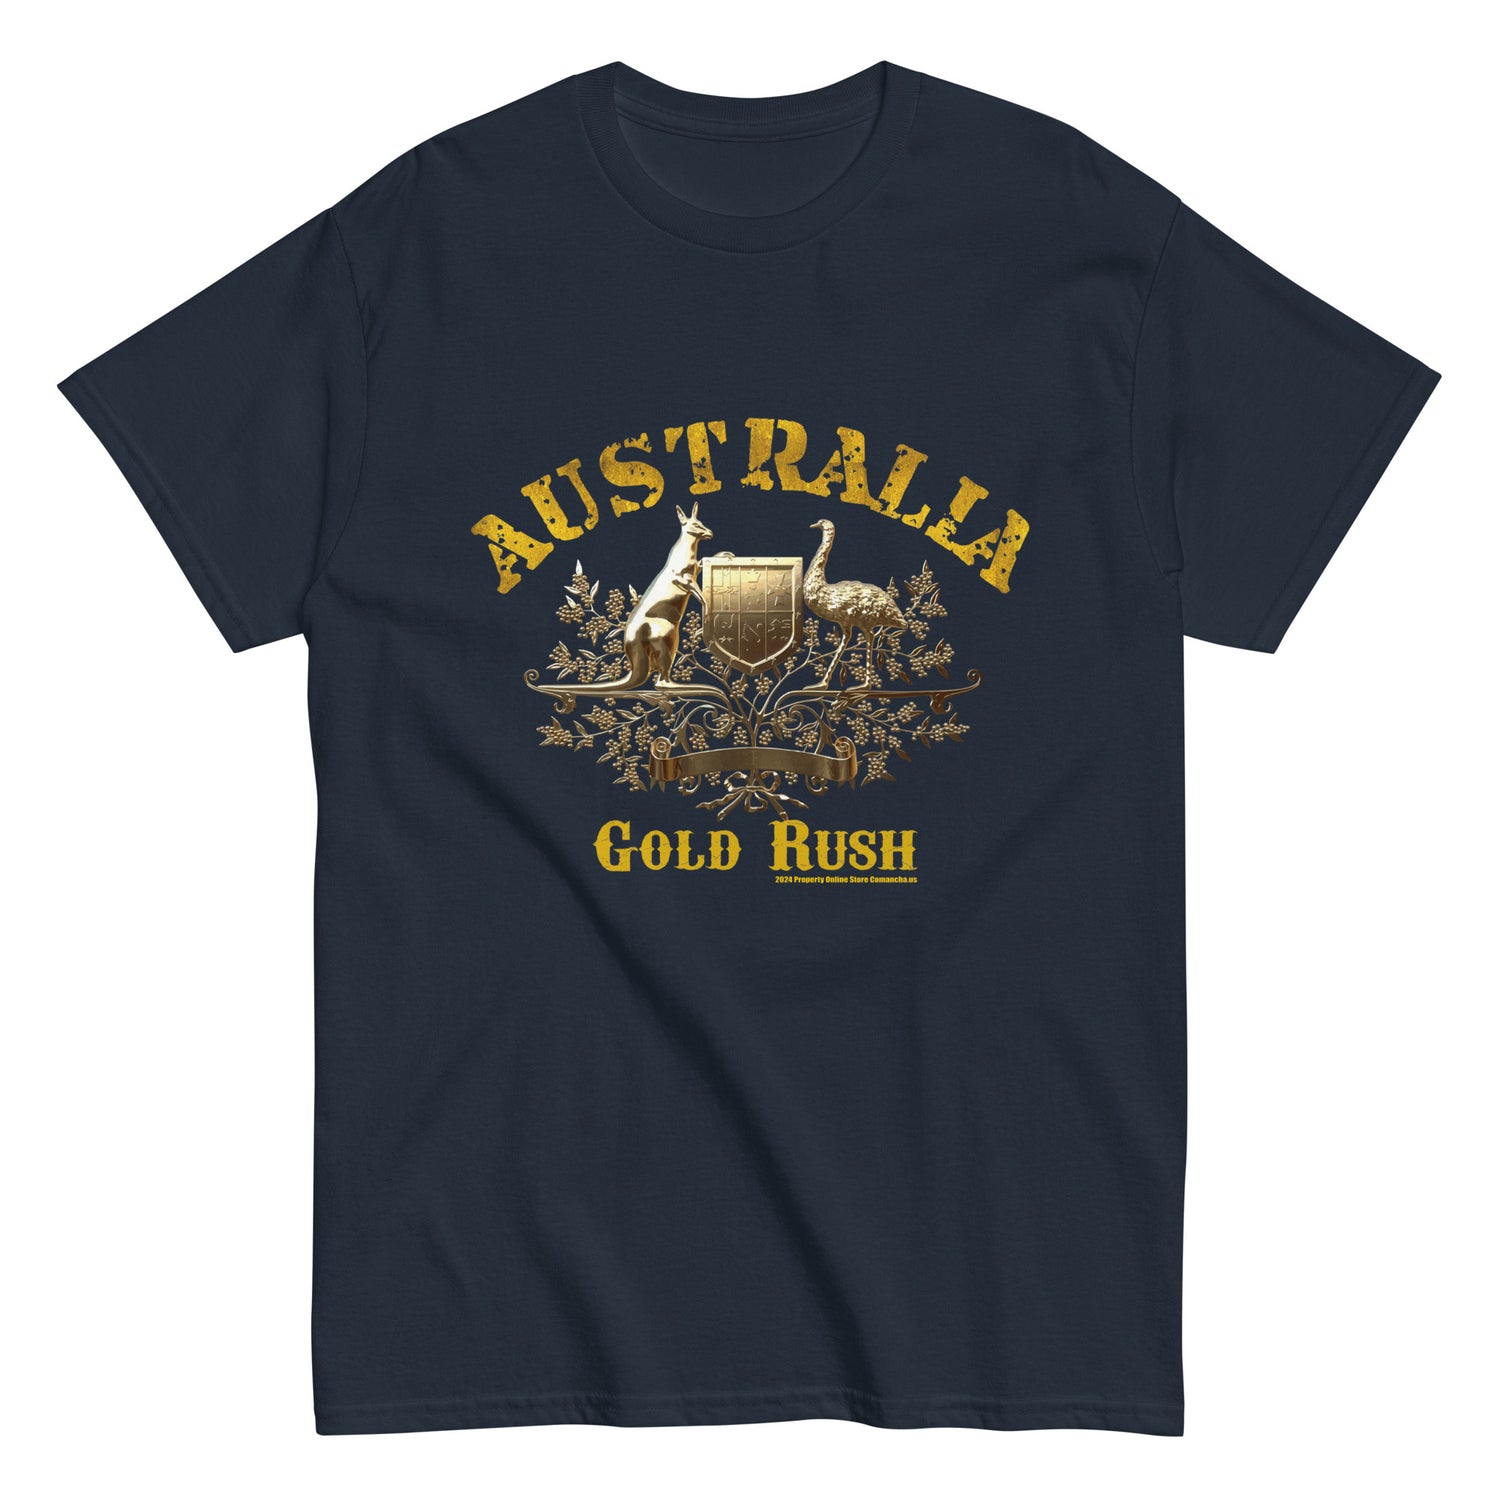 Australia Gold Rush T-shirt, Gold Rush T-shirt,Gold Rush Tee, Comancha T-shirt, Australia Gold Rush Tee, Comancha Tee,